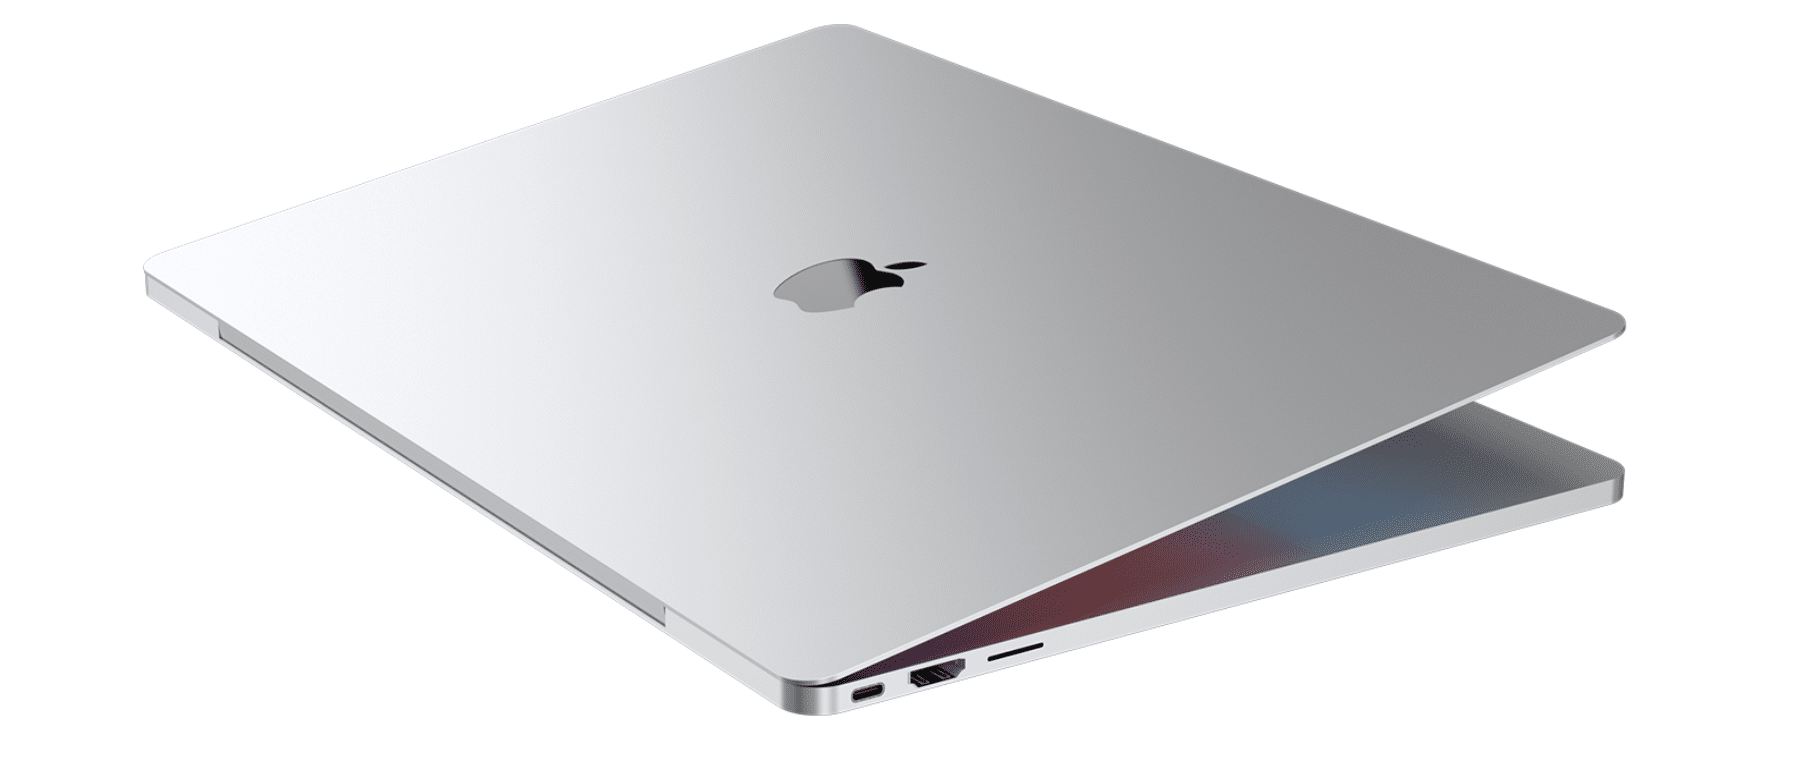 redesigned 2021 m1x macbook pro render